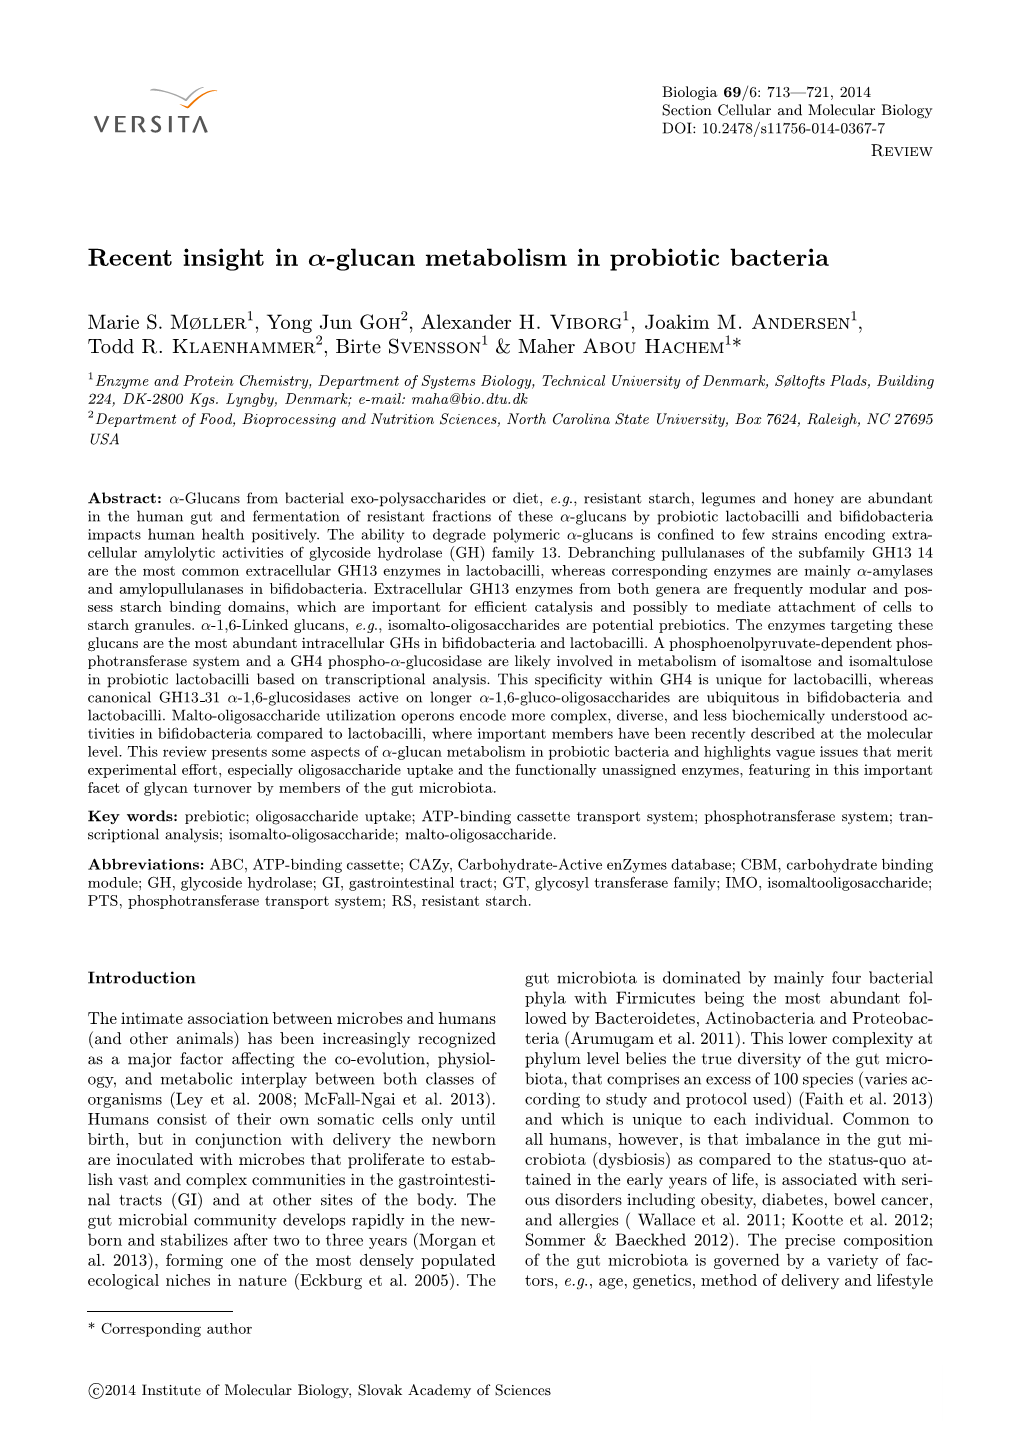 Recent Insight in Α-Glucan Metabolism in Probiotic Bacteria